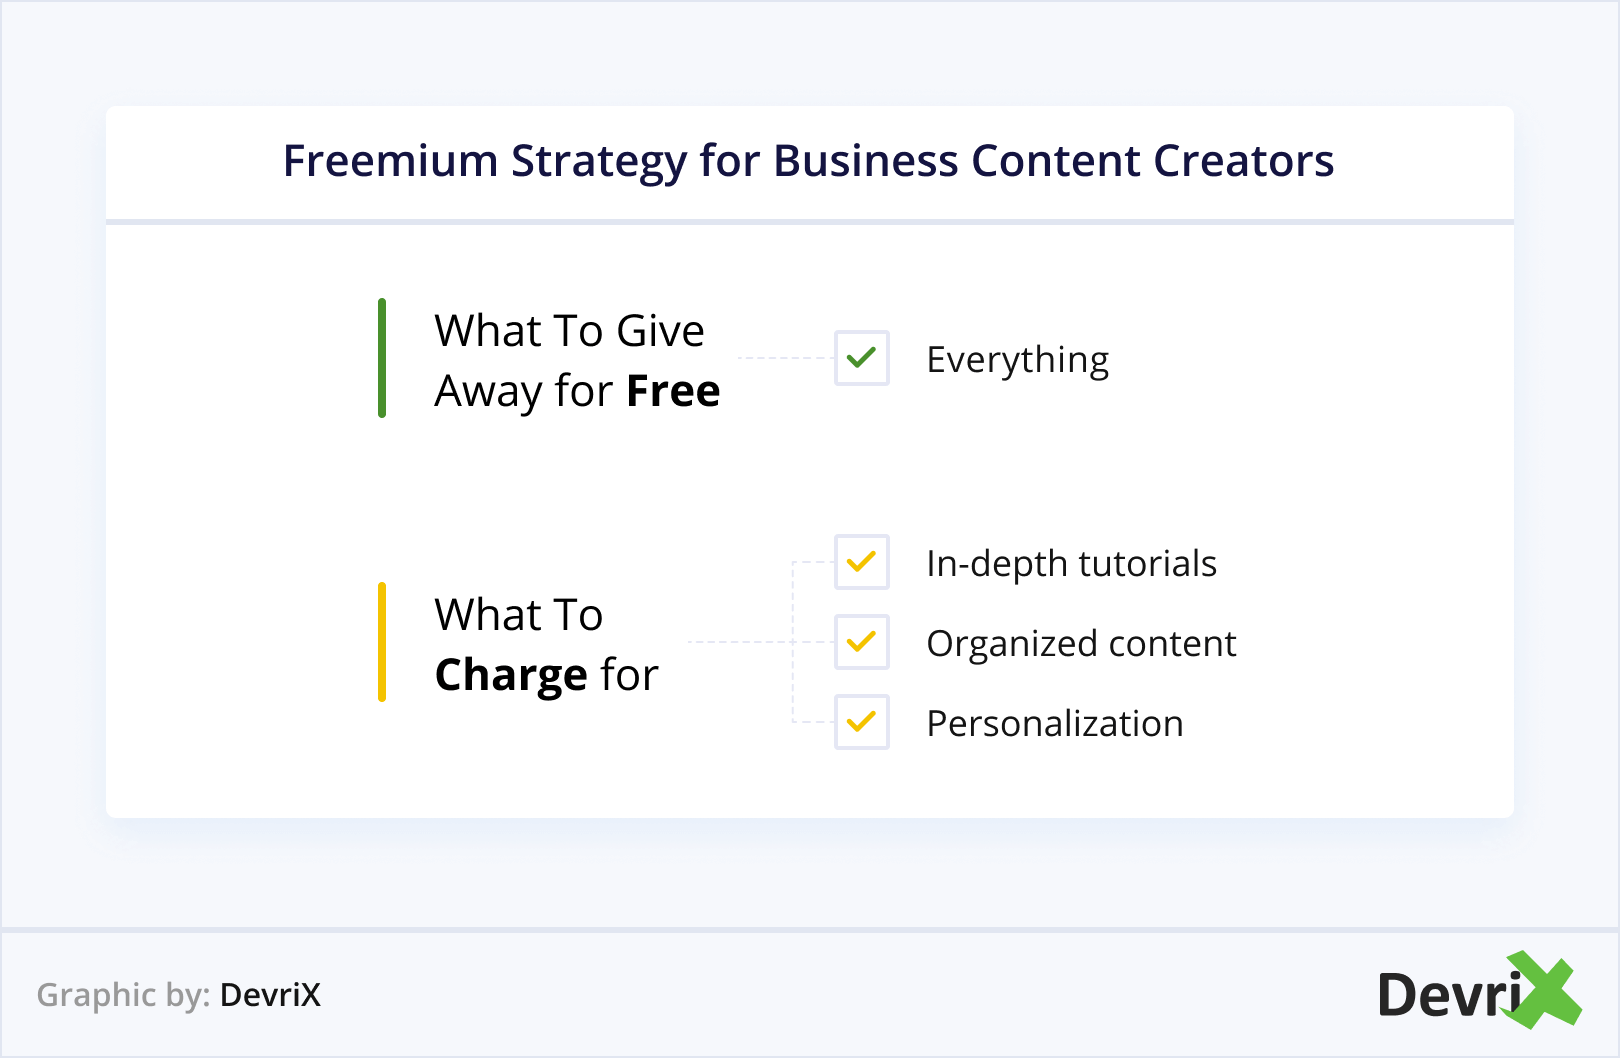 Freemium Strategy for Business Content Creators